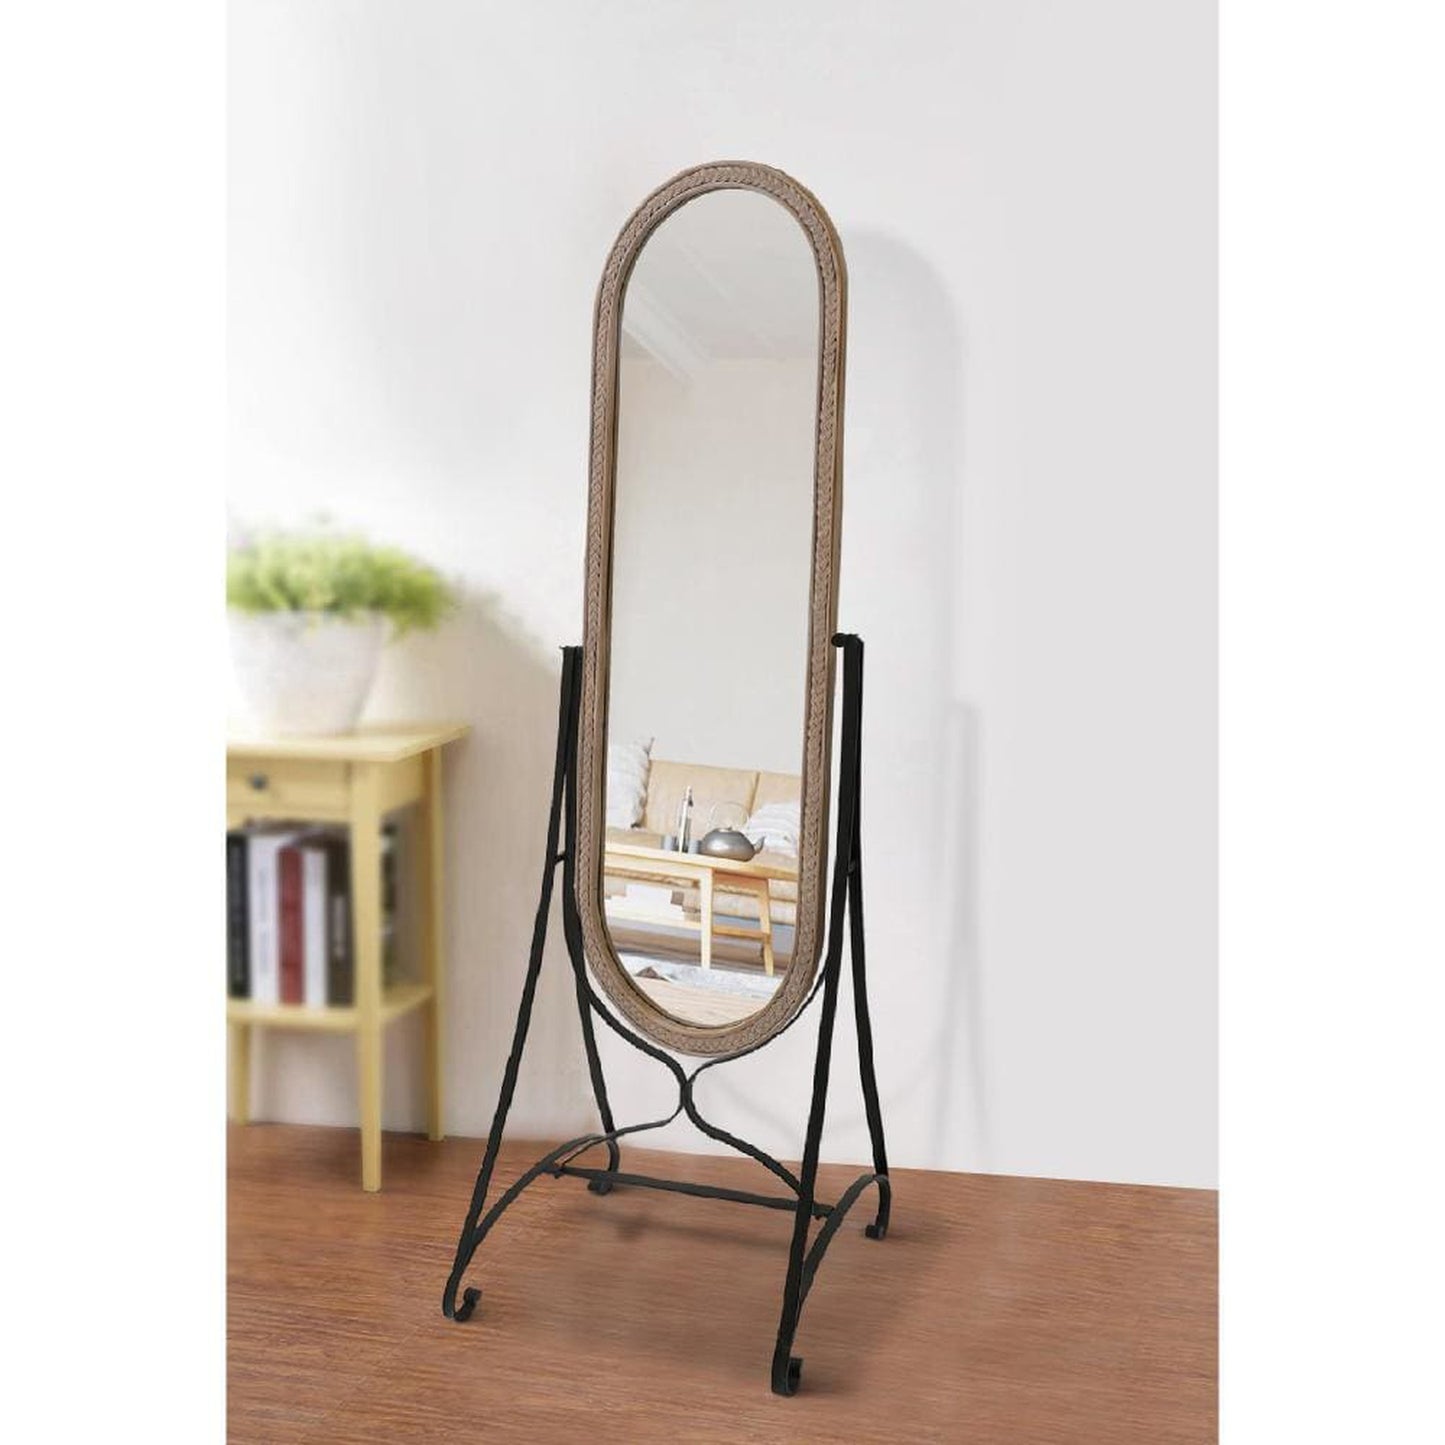 Benzara 64" Brown Oval Carved Wood Frame Adjustable Floor Mirror With Metal Stand